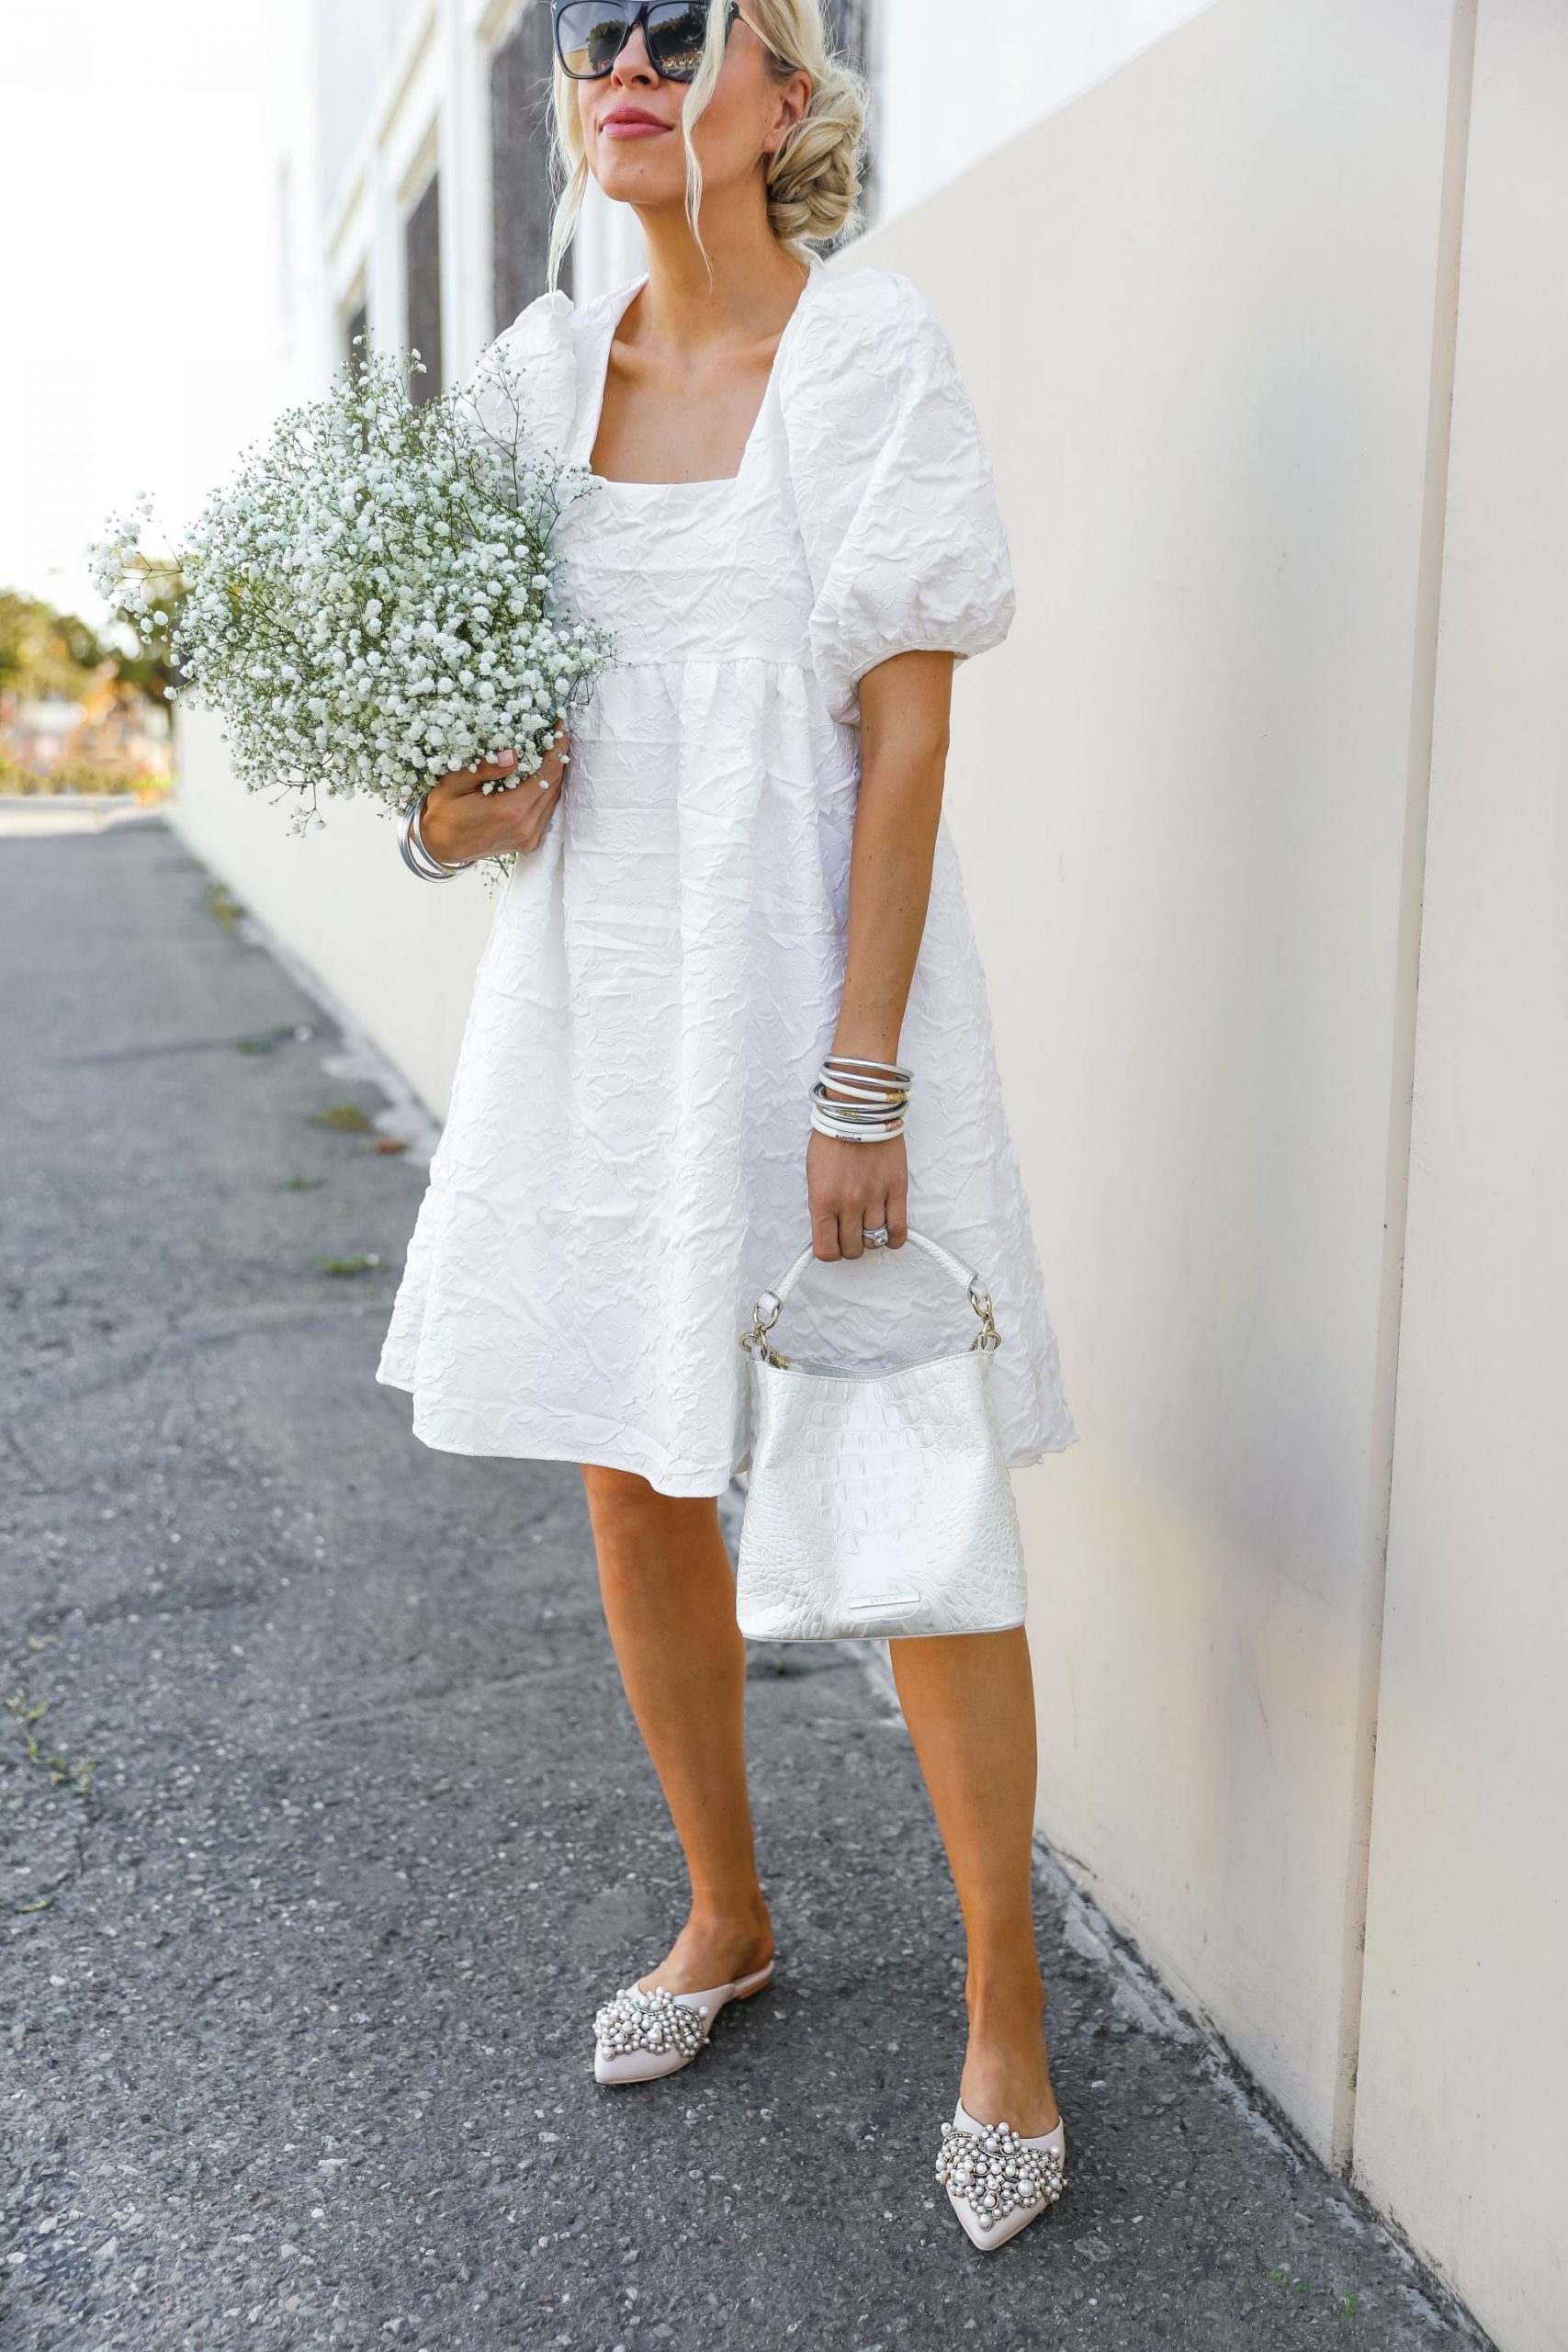 White Vita Grace midi dress with budha girl bracelets, feminine style by fashion blogger Lombard & Fifth styling beautiful accessories.